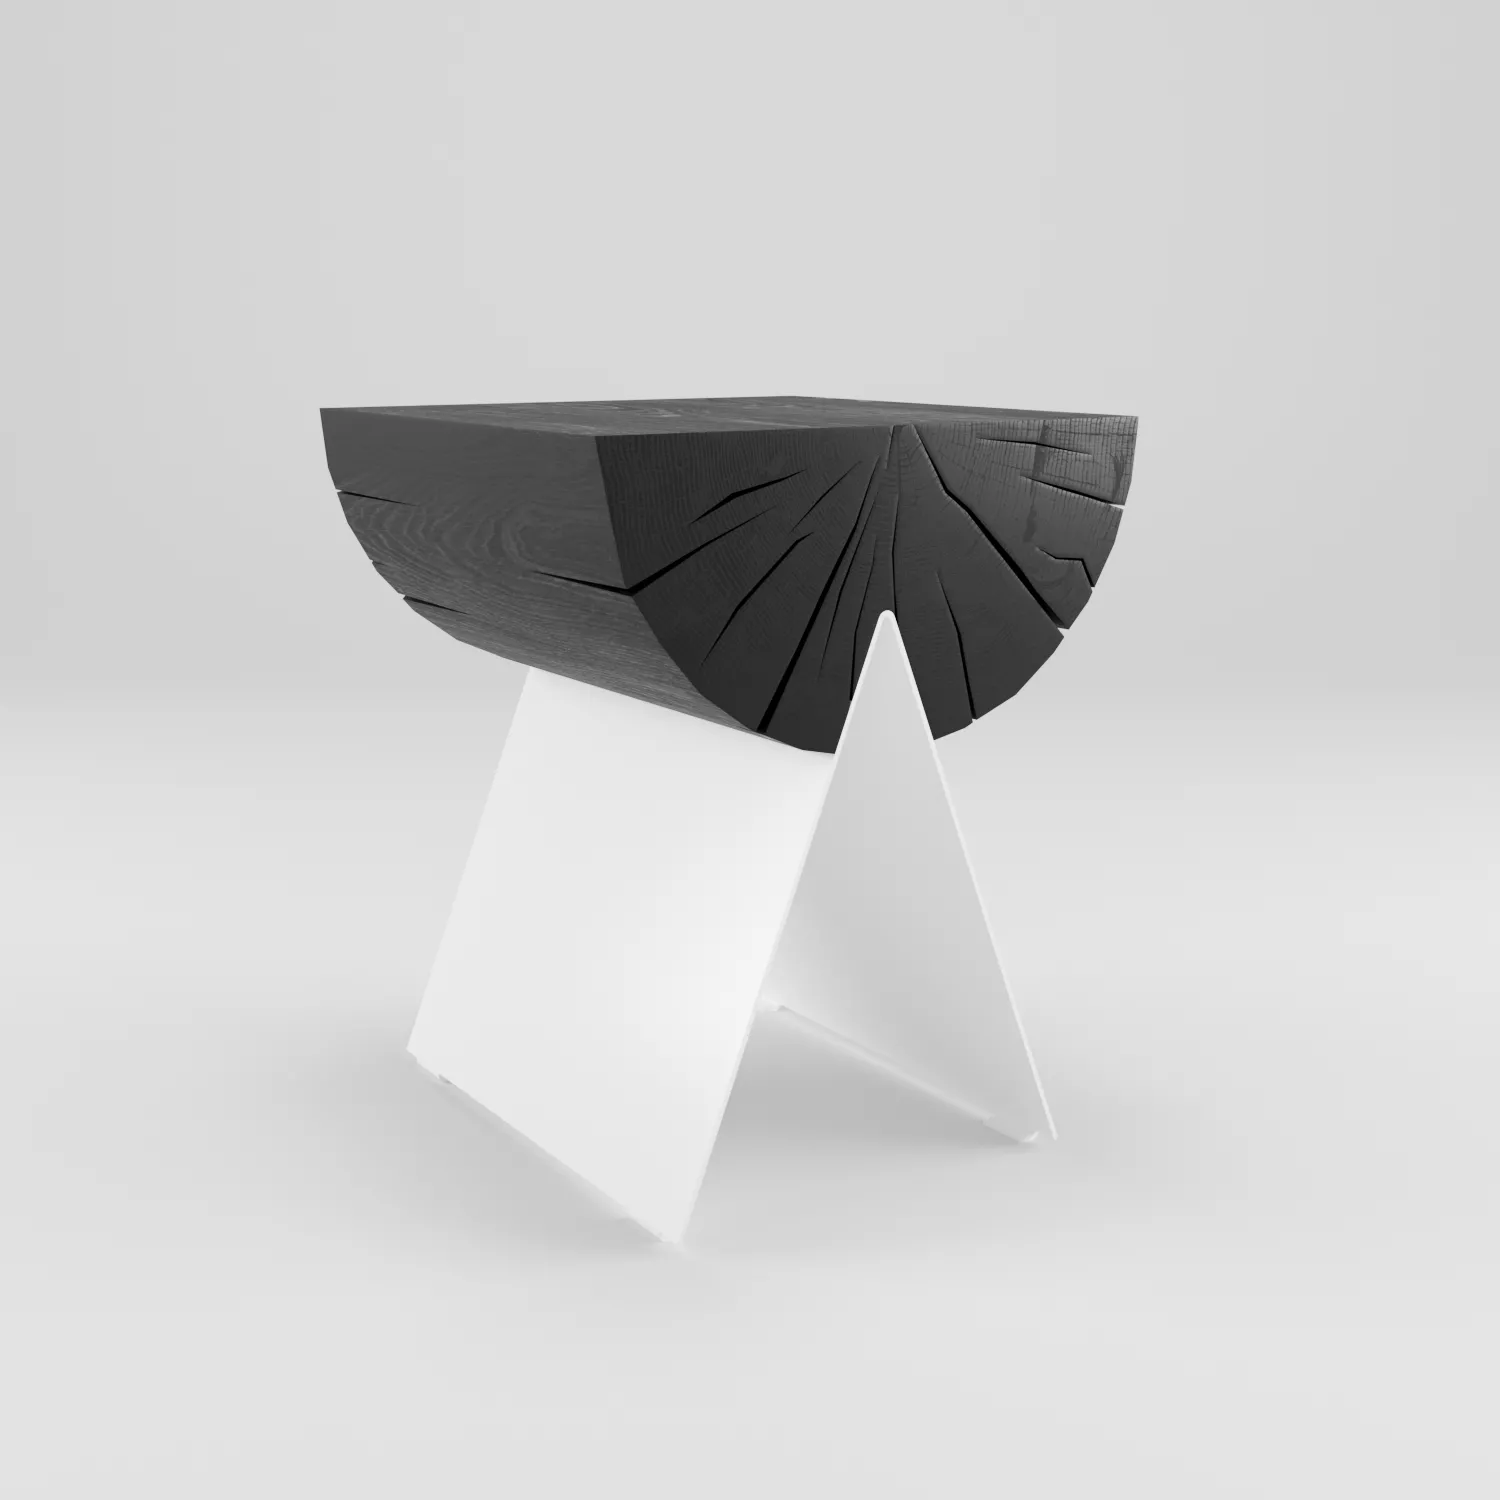 A half stool by witaminadprojekt – 875